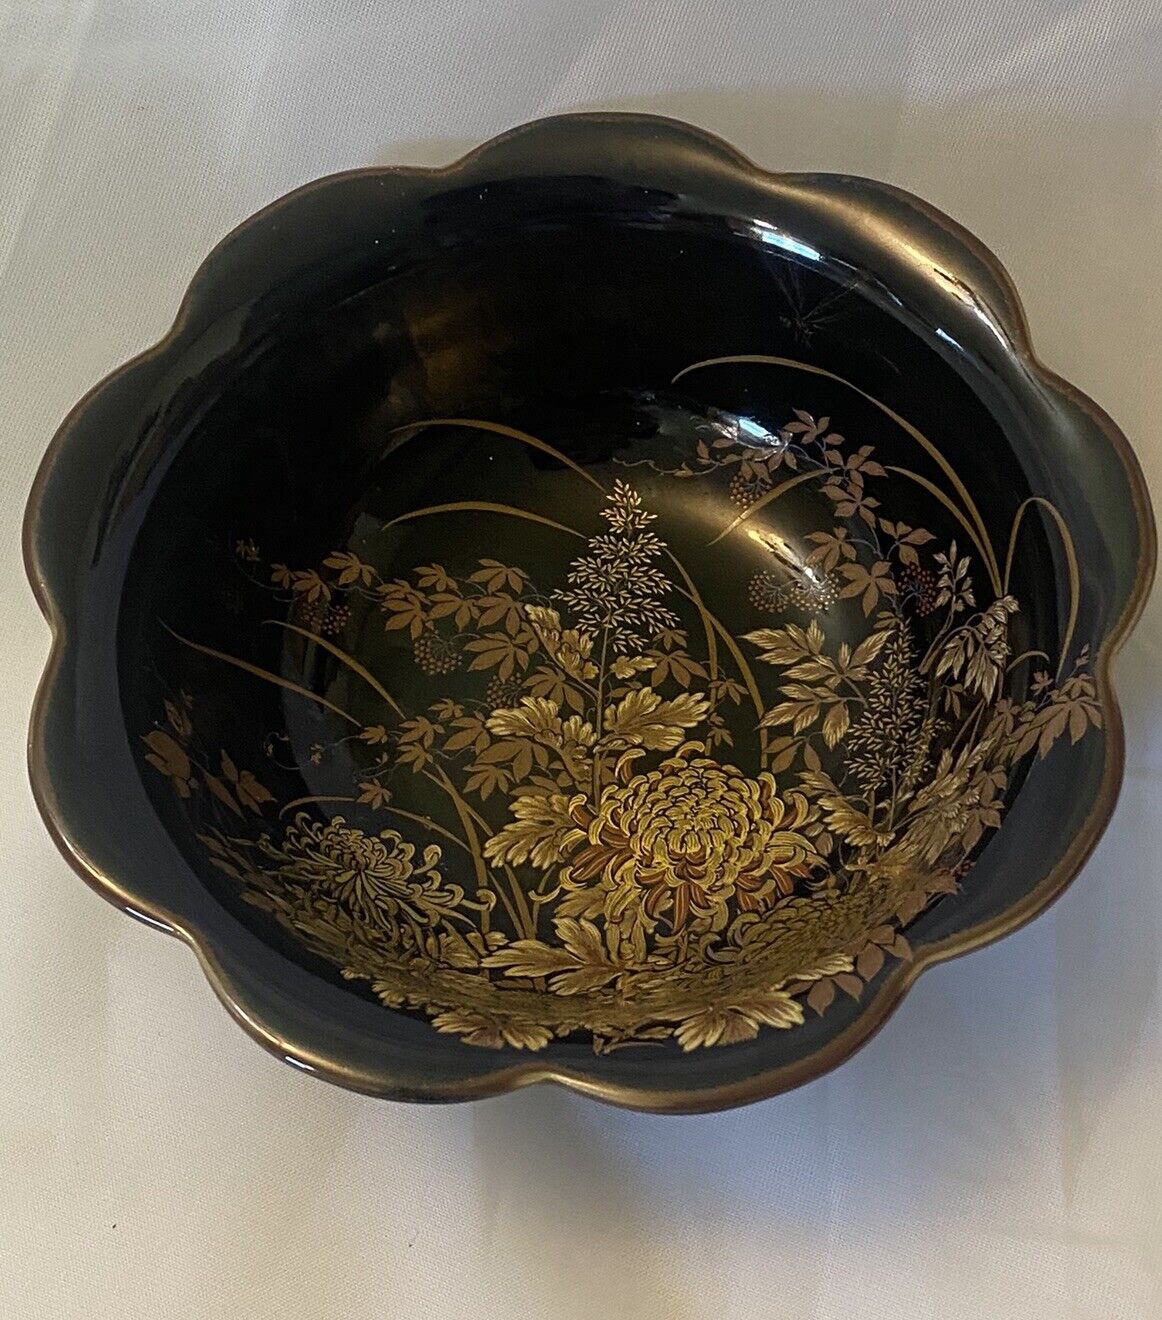 Shibata Japan Tenmoku-Kiku Black Gold Floral Bowl Scalloped Edge Vintage